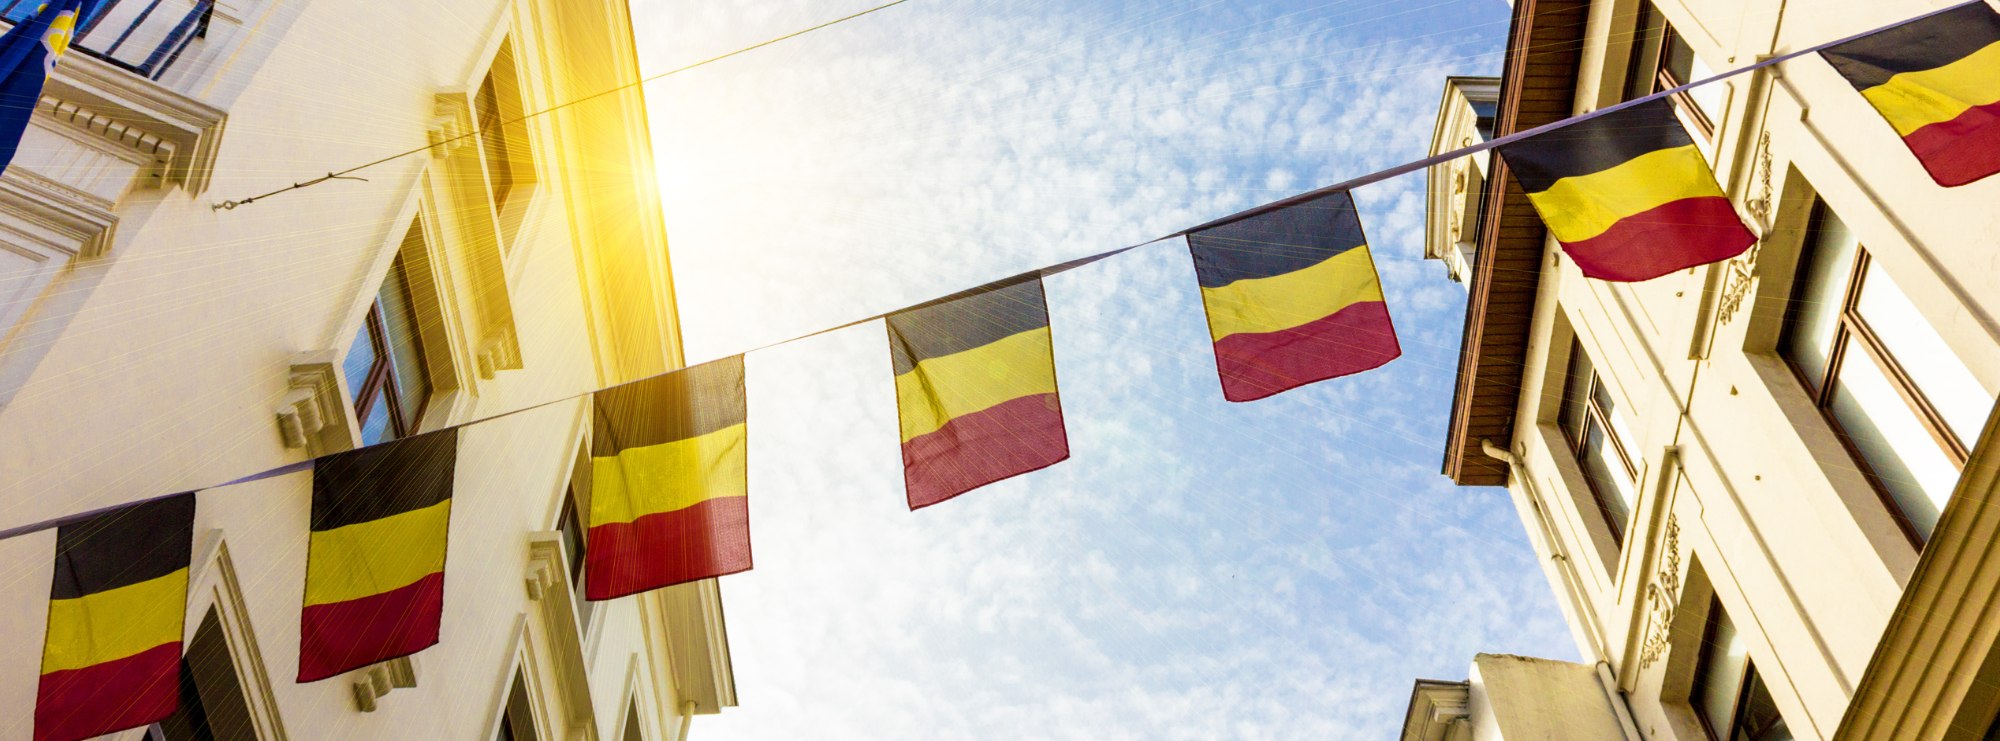 21 fun facts about Belgium